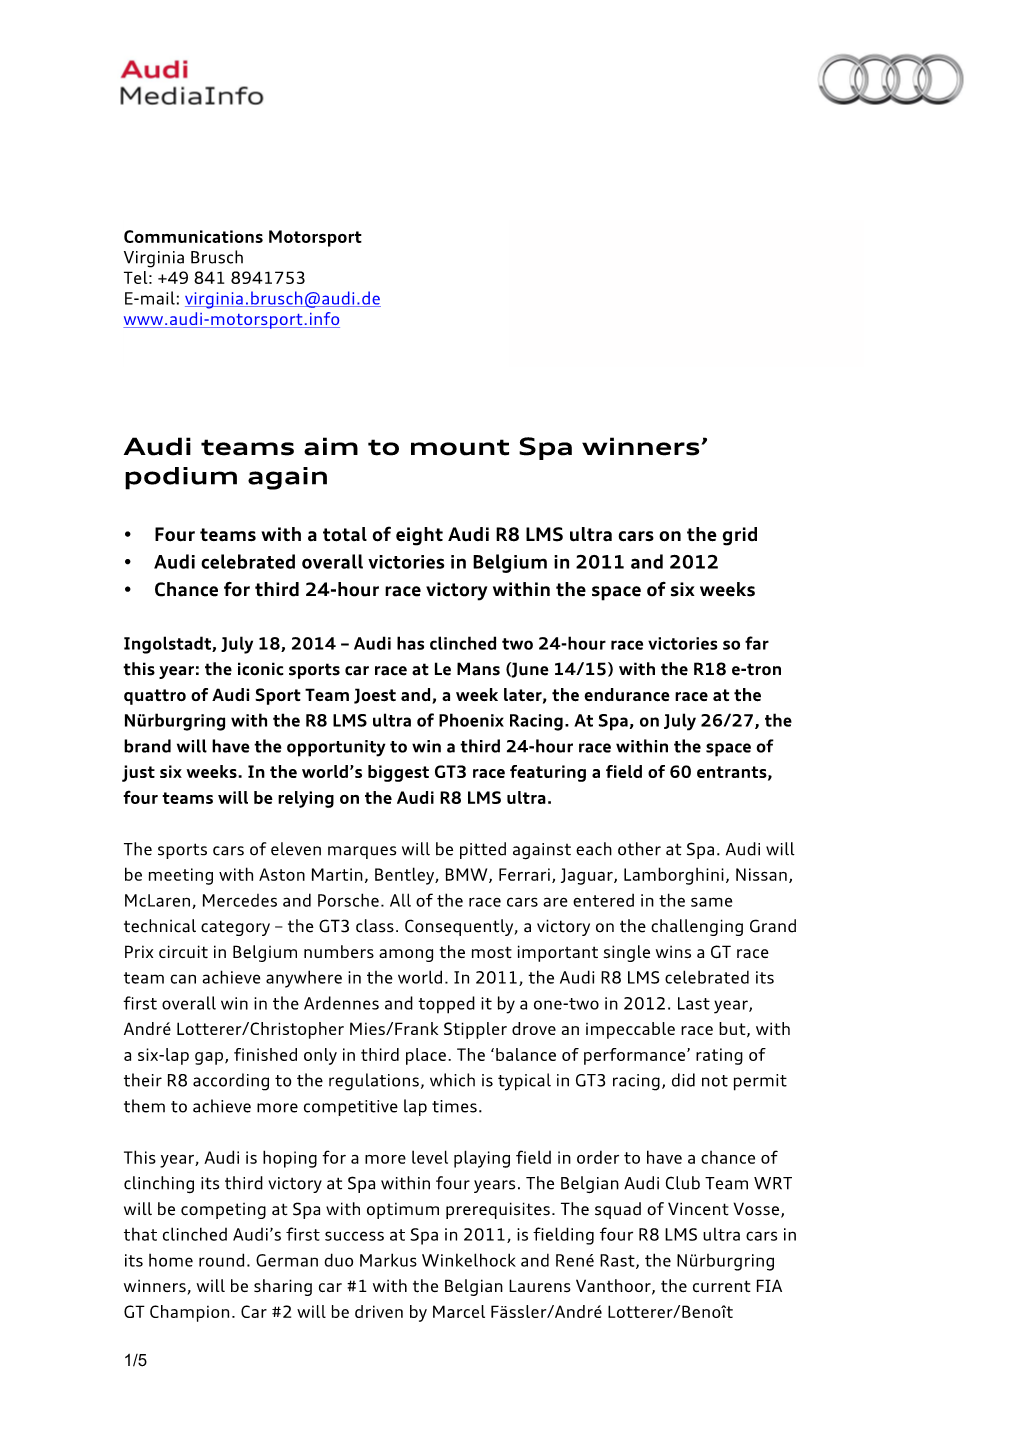 Audi Teams Aim to Mount Spa Winners' Podium Again